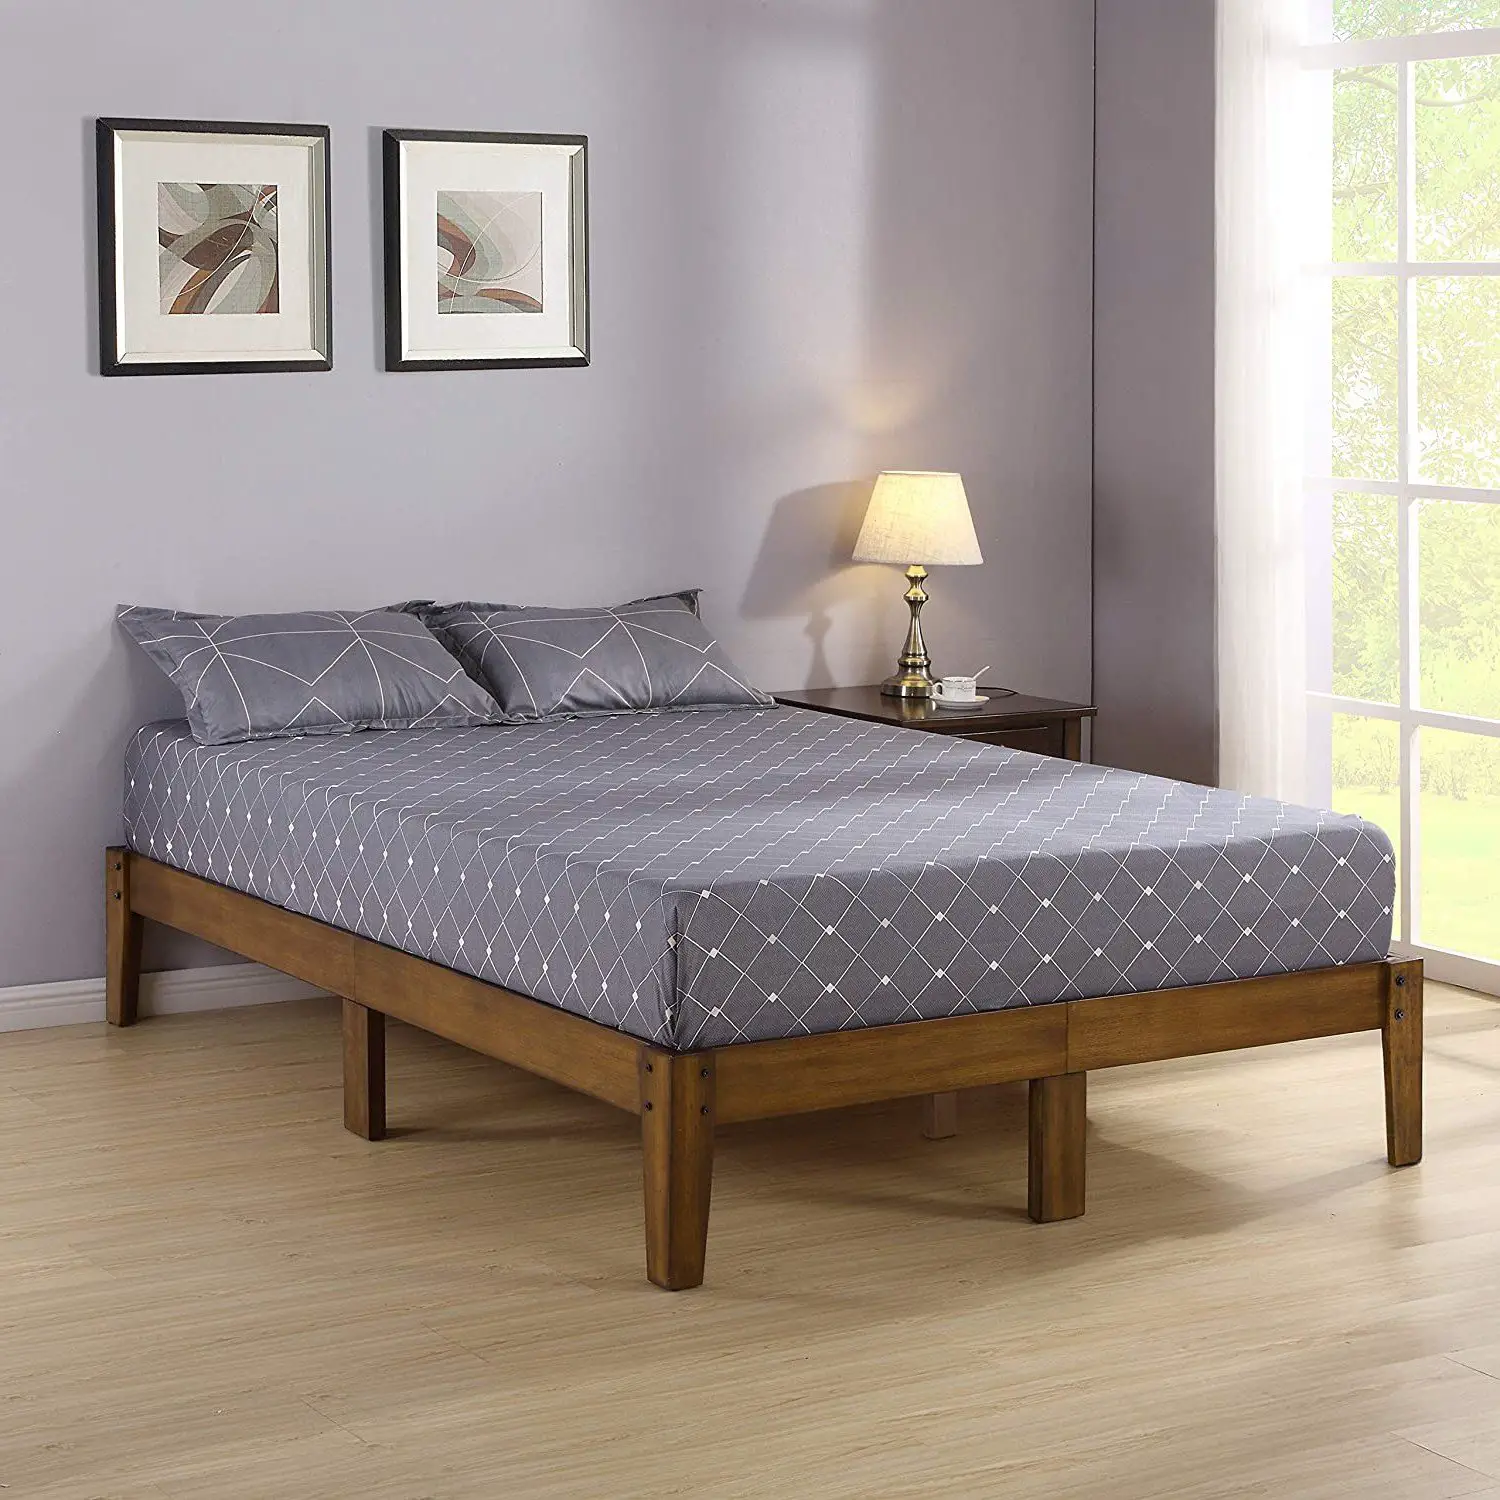 Ktaxon 14 Inch Solid Wood Platform Bed Frame, No Box Spring Needed ...